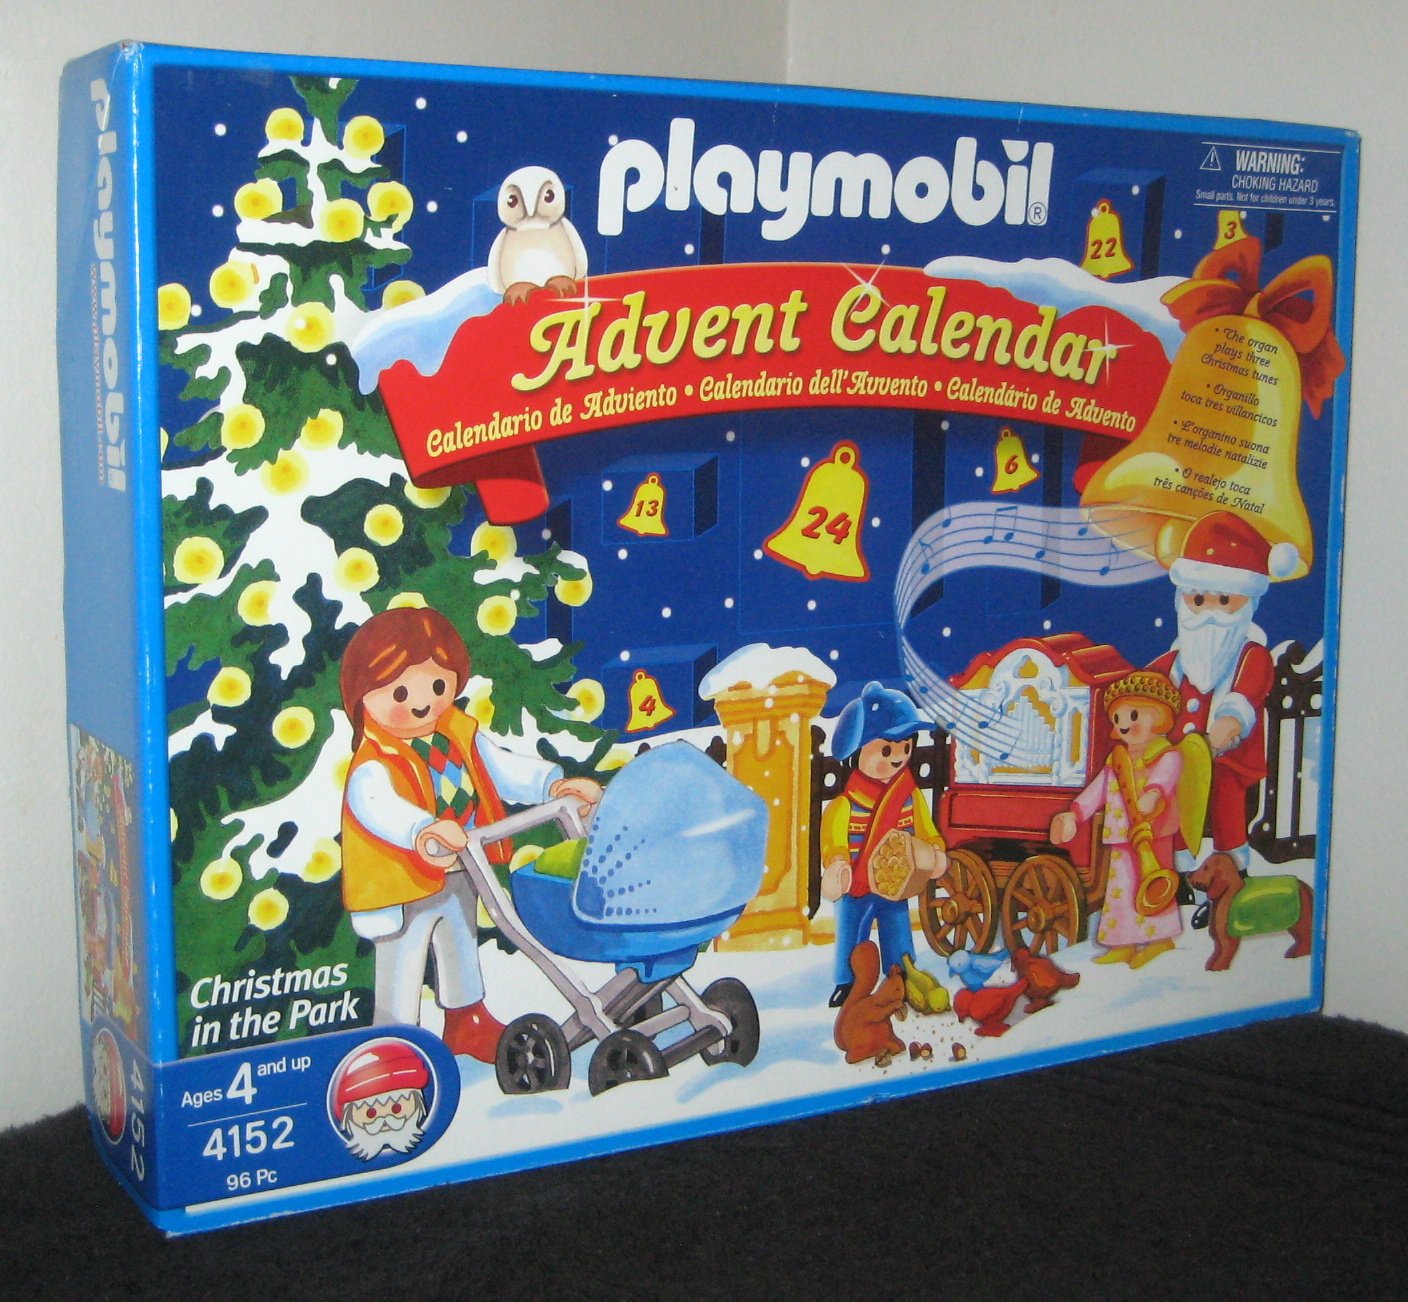 SOLD Playmobil Advent Calendar 4152 Christmas in the Park Geobra Klicky